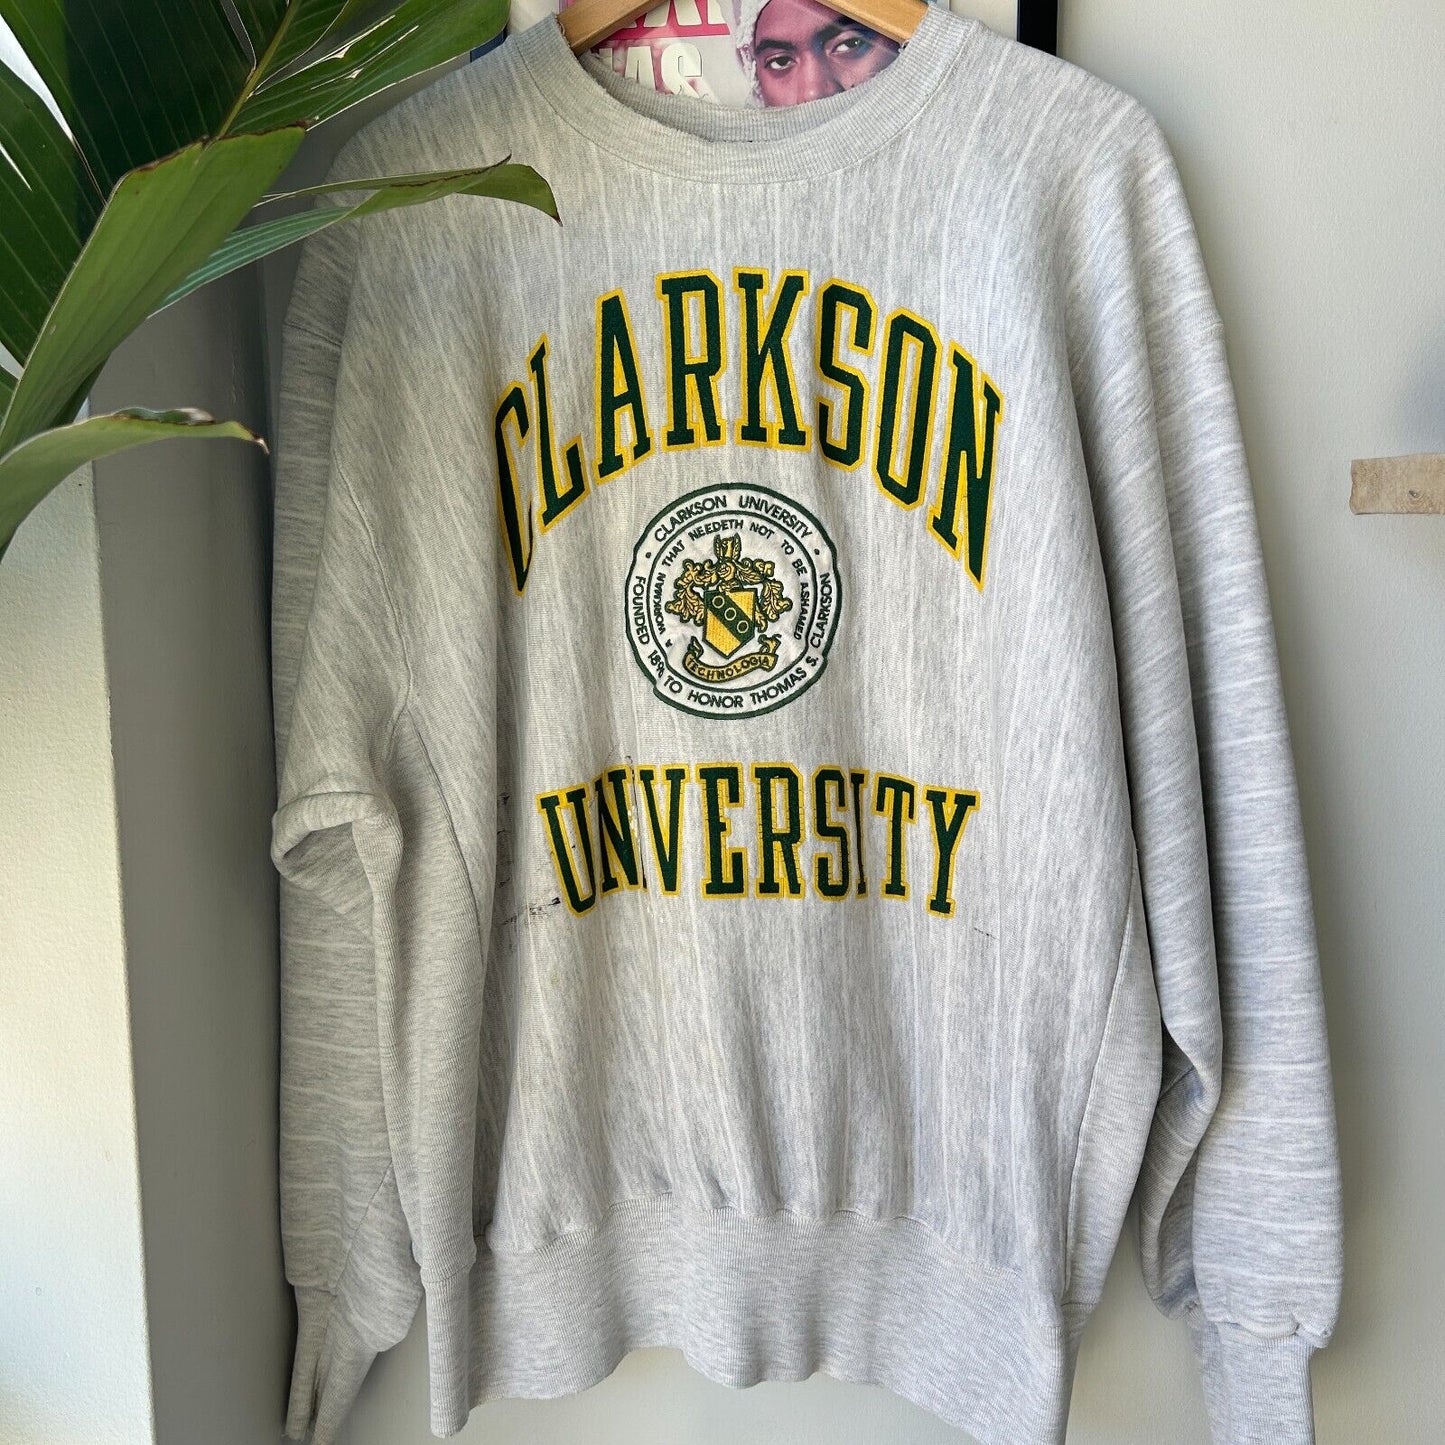 VINTAGE 90s | Clarkson University Vertical Striped Crewneck Sweater sz XL Adult